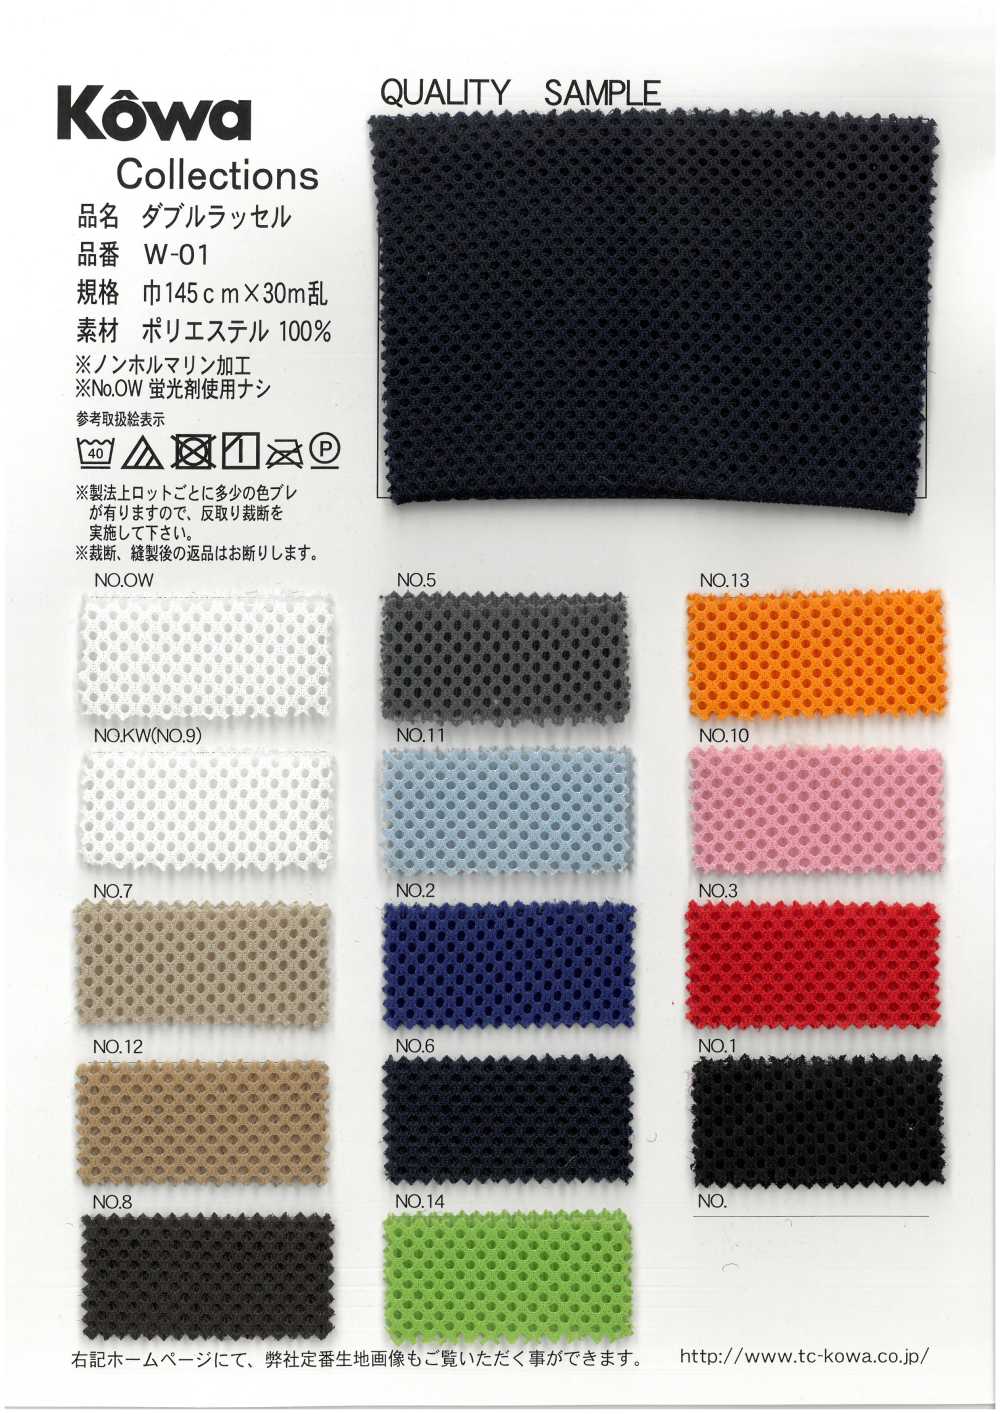 W-01 Dệt Kim đan Dọc đôi[Vải] Yukikazu